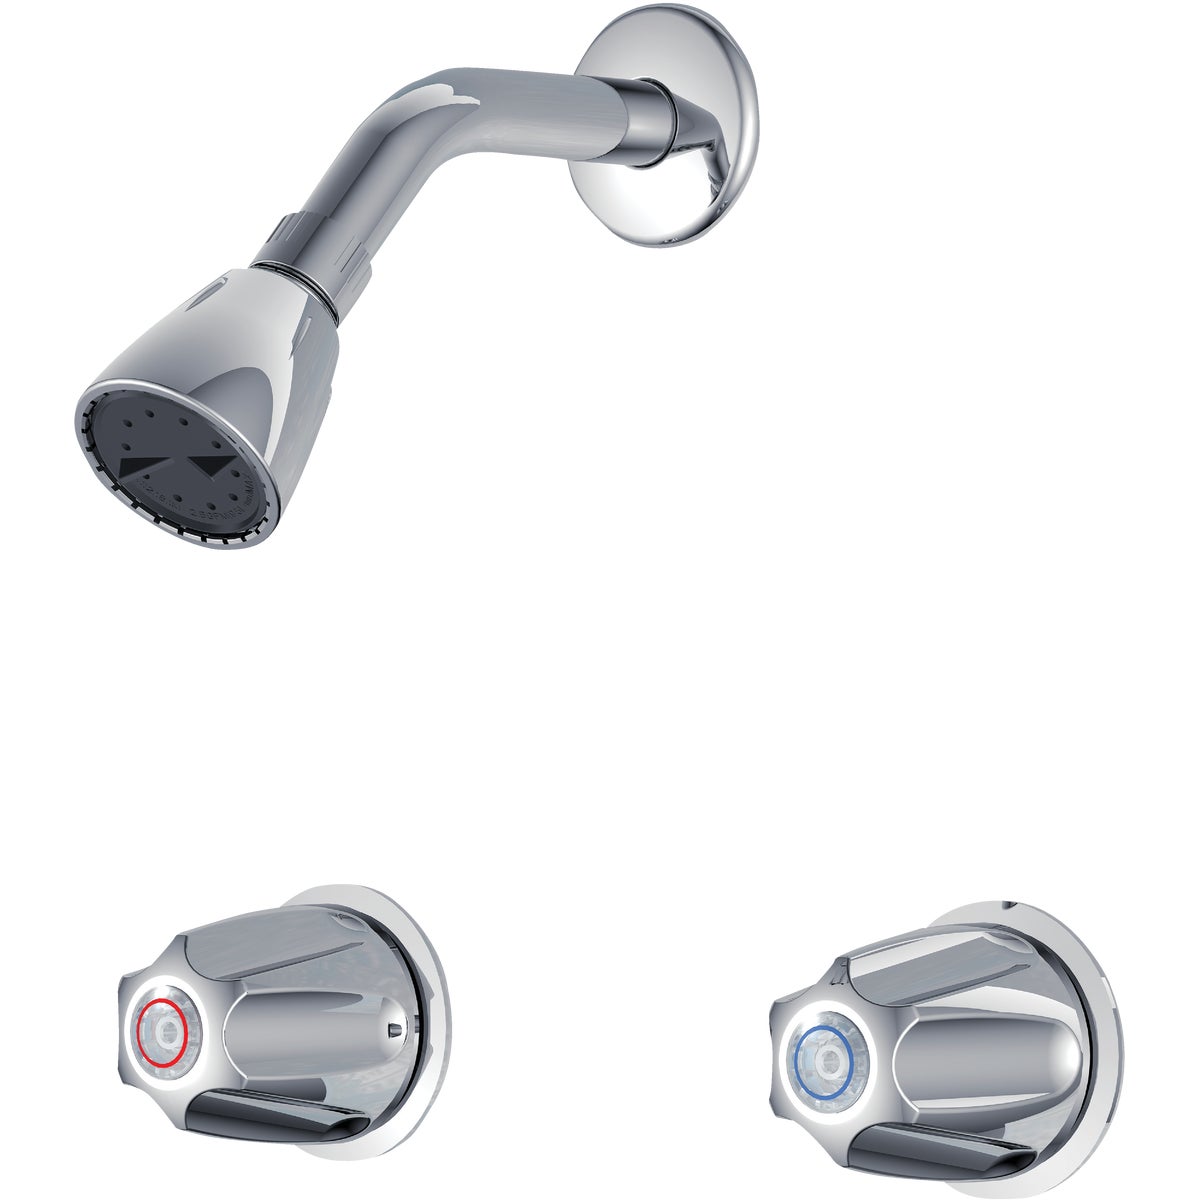 Item 400702, 2-handle metallic shower faucet with metal handles. 1.